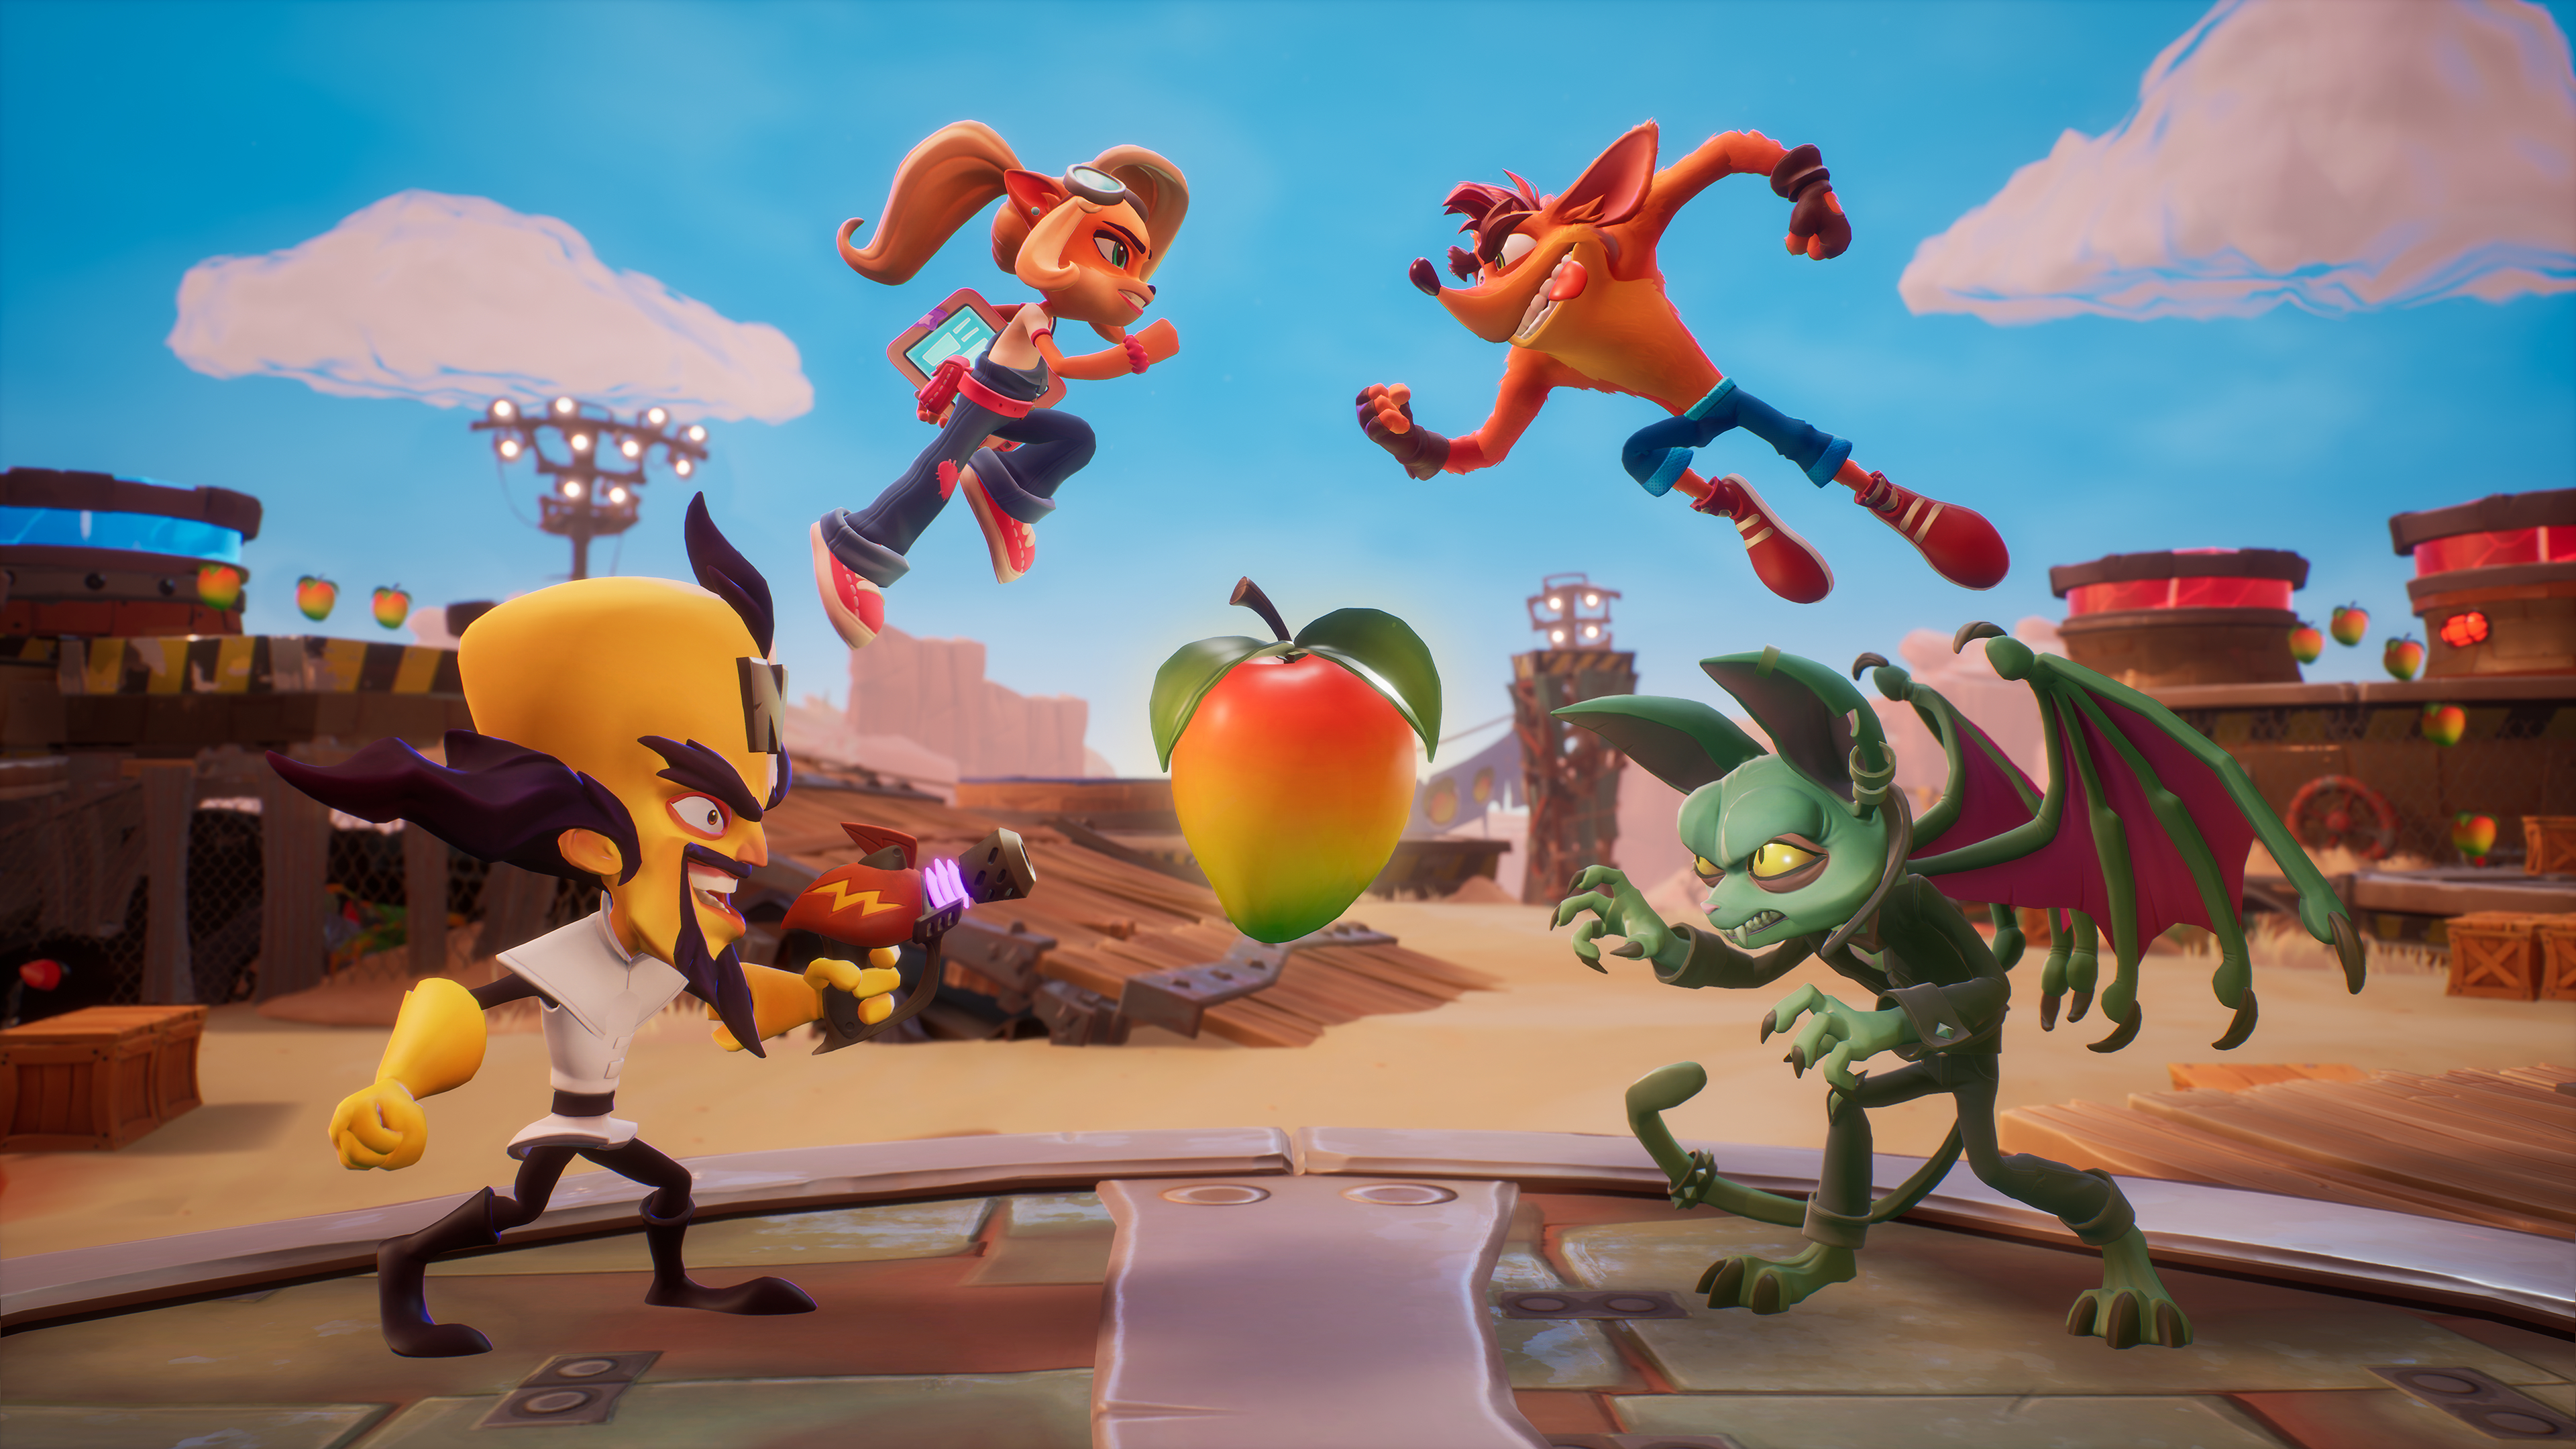 Crash Team Rumble: Gameplay Launch Trailer